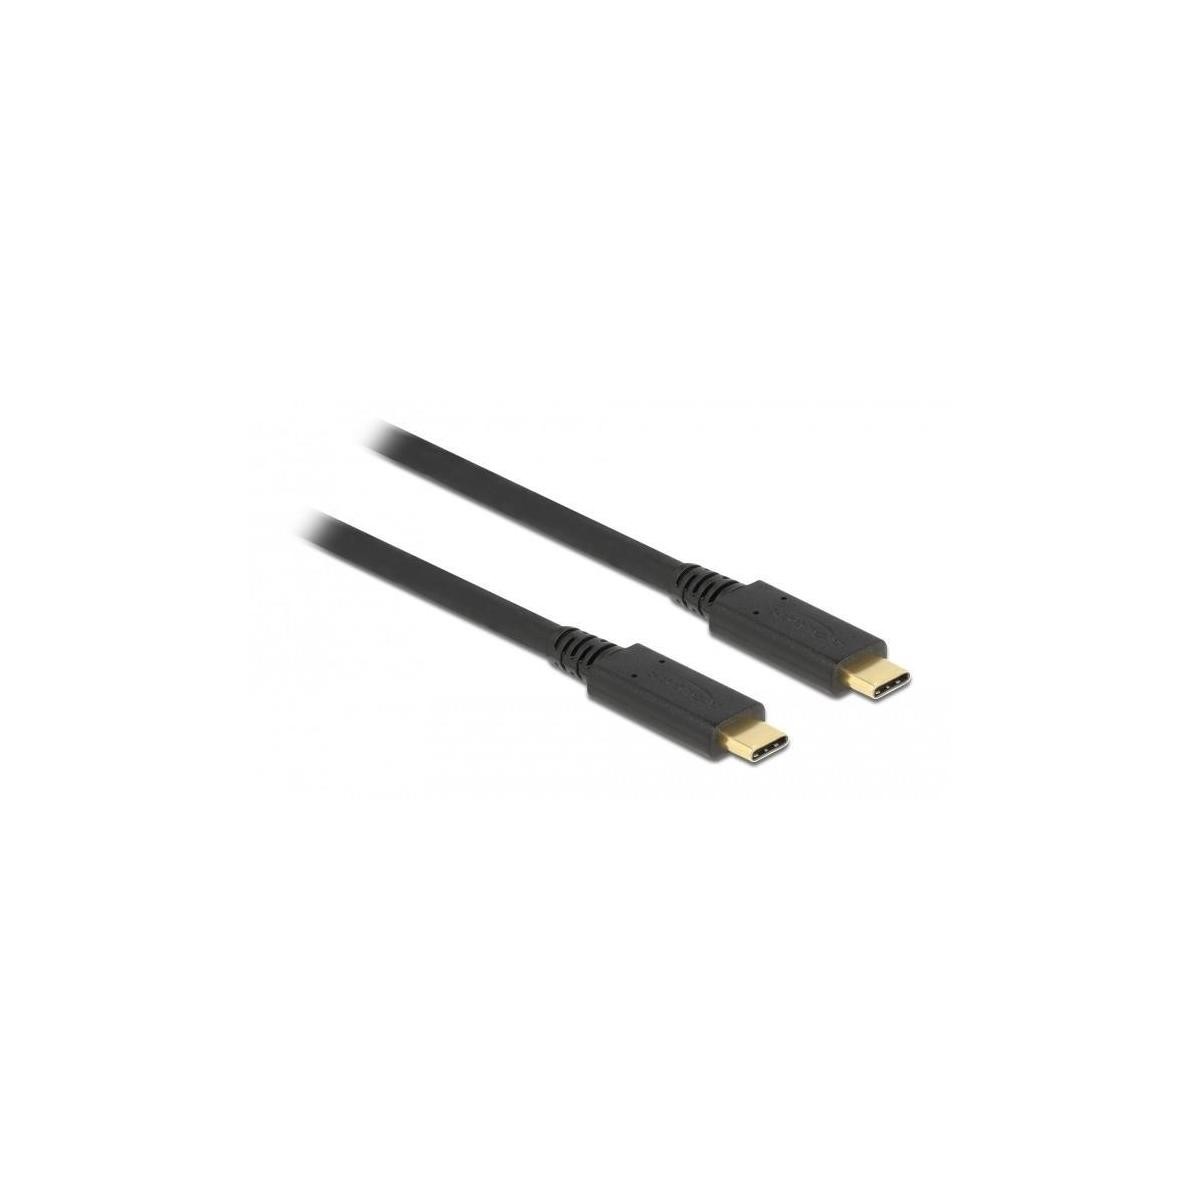 Kabel <gt/> 5A Kabel, DELOCK 3.1 C USB DELOCK 1.0m mehrfarbig E-Marker Gen2 schwarz C